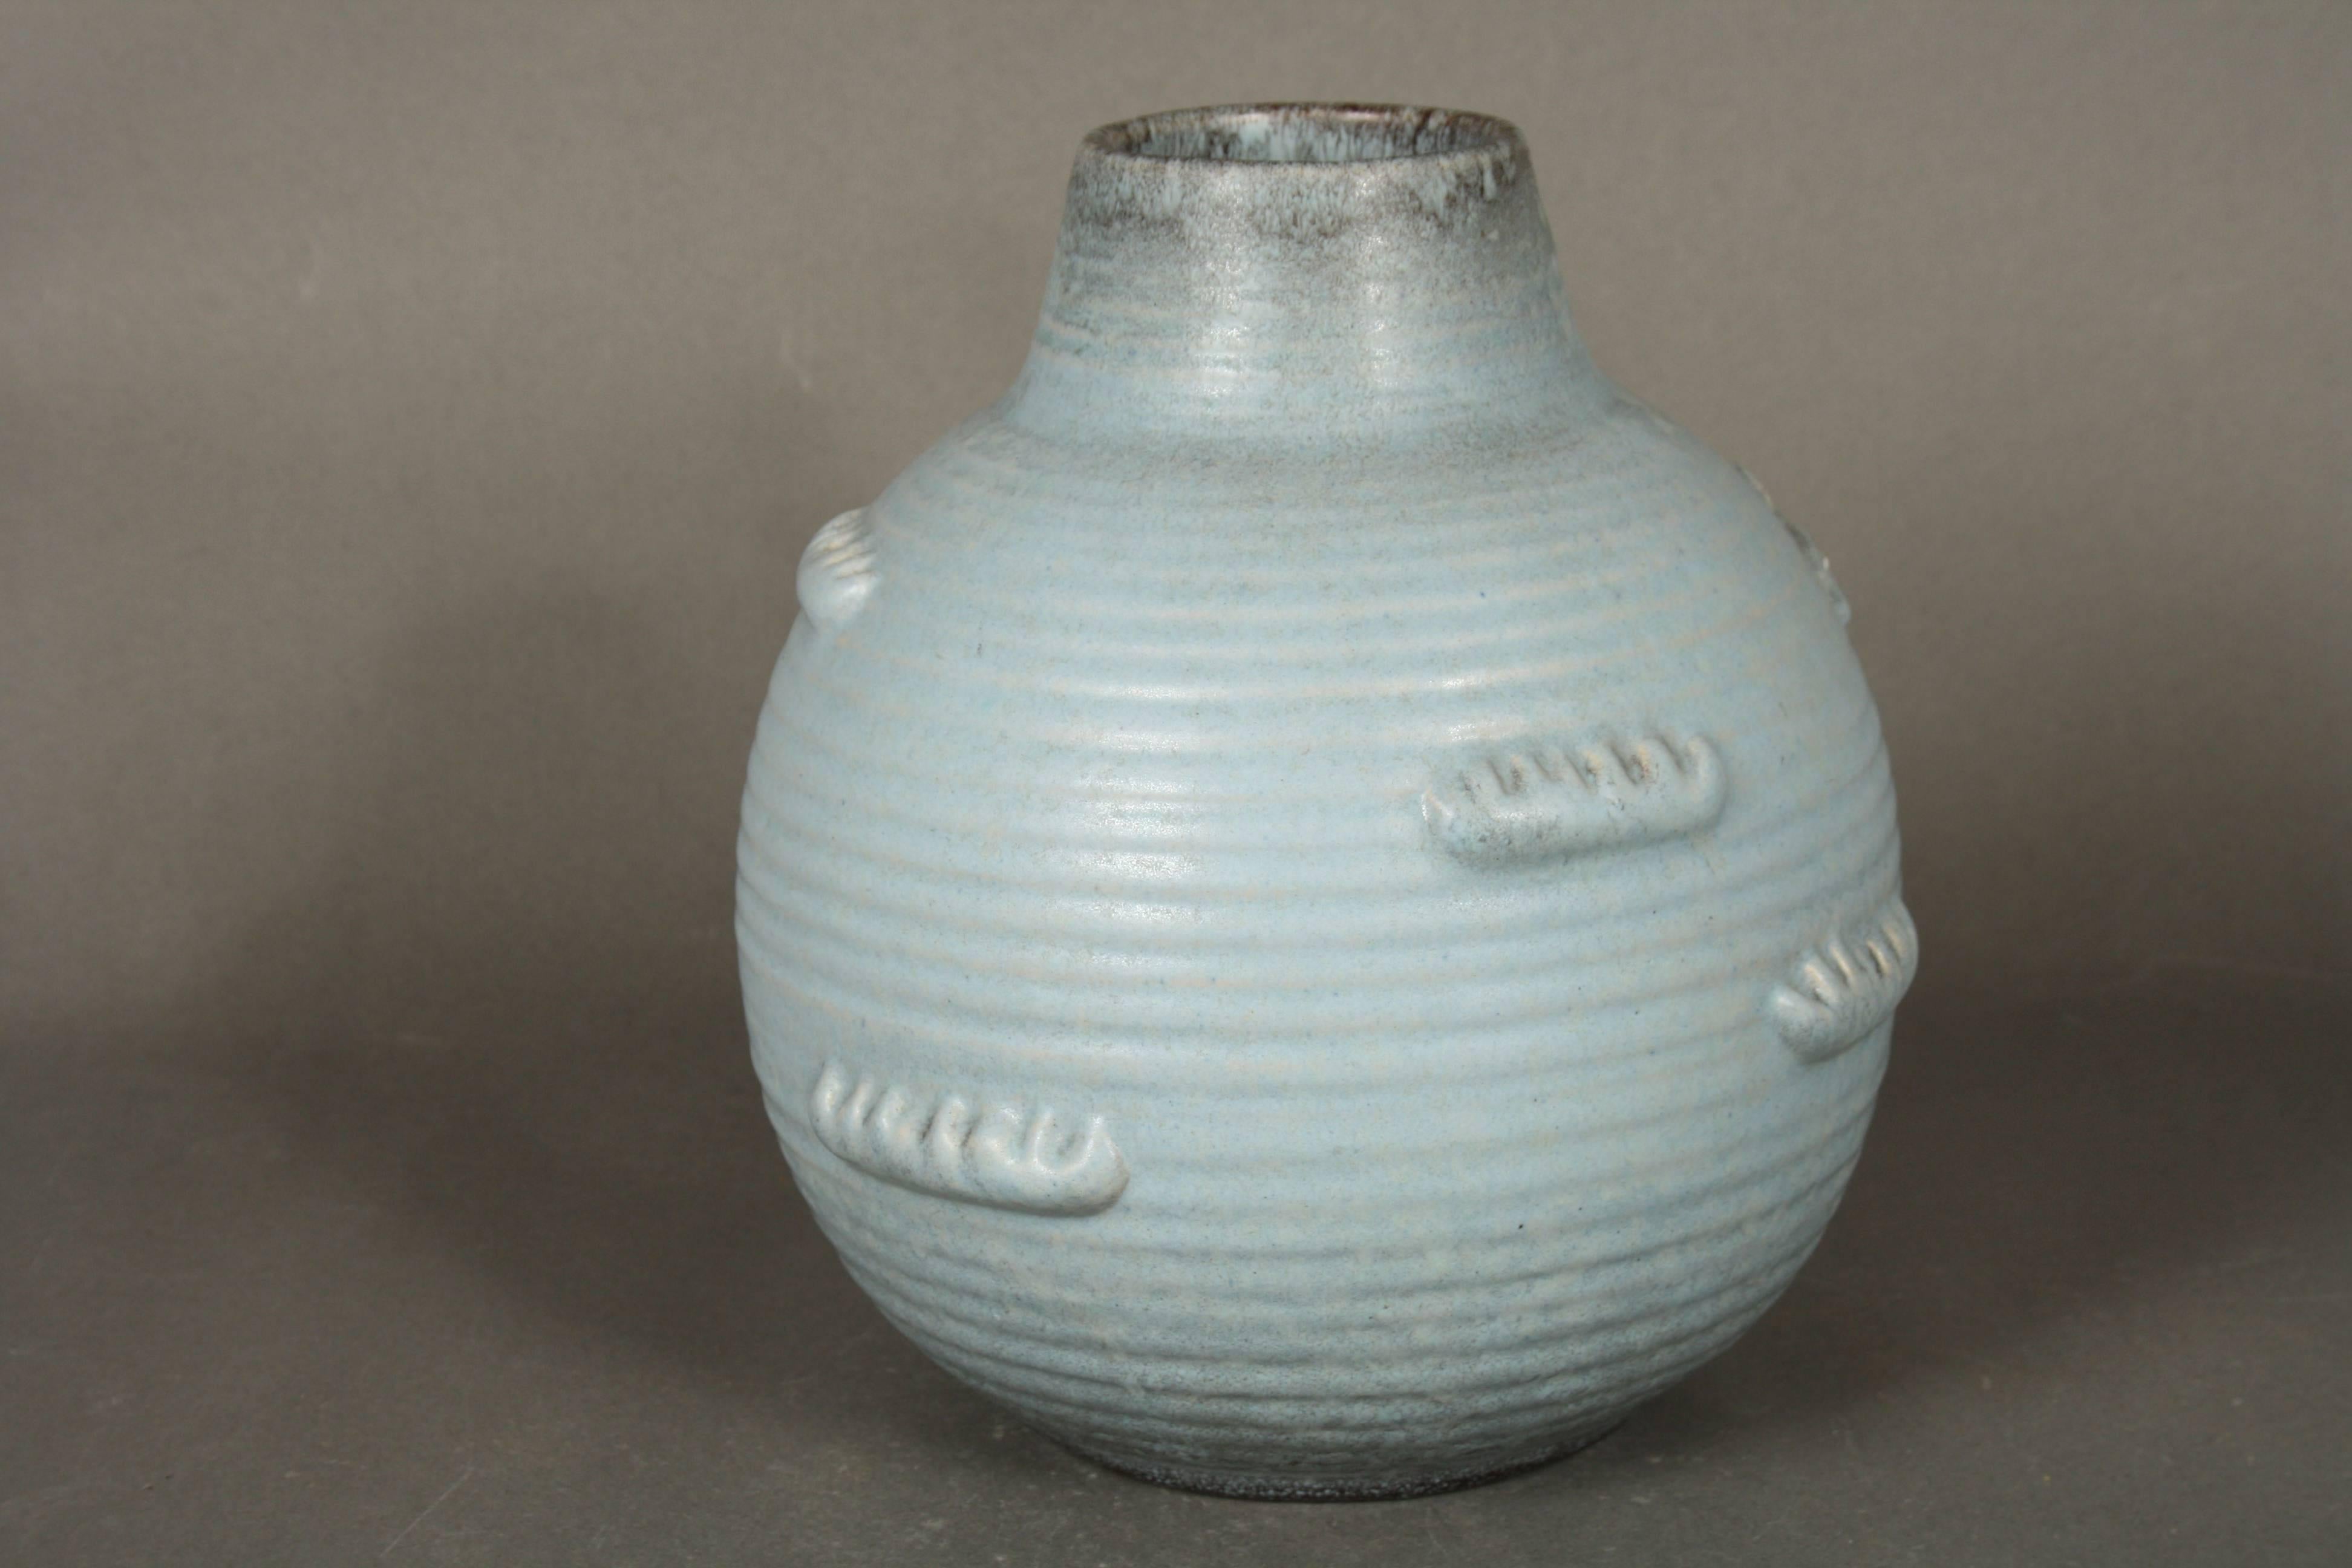 Danish Michael Andersen Stoneware Vase with Light Blue Glaze, 1930s from Denmark For Sale